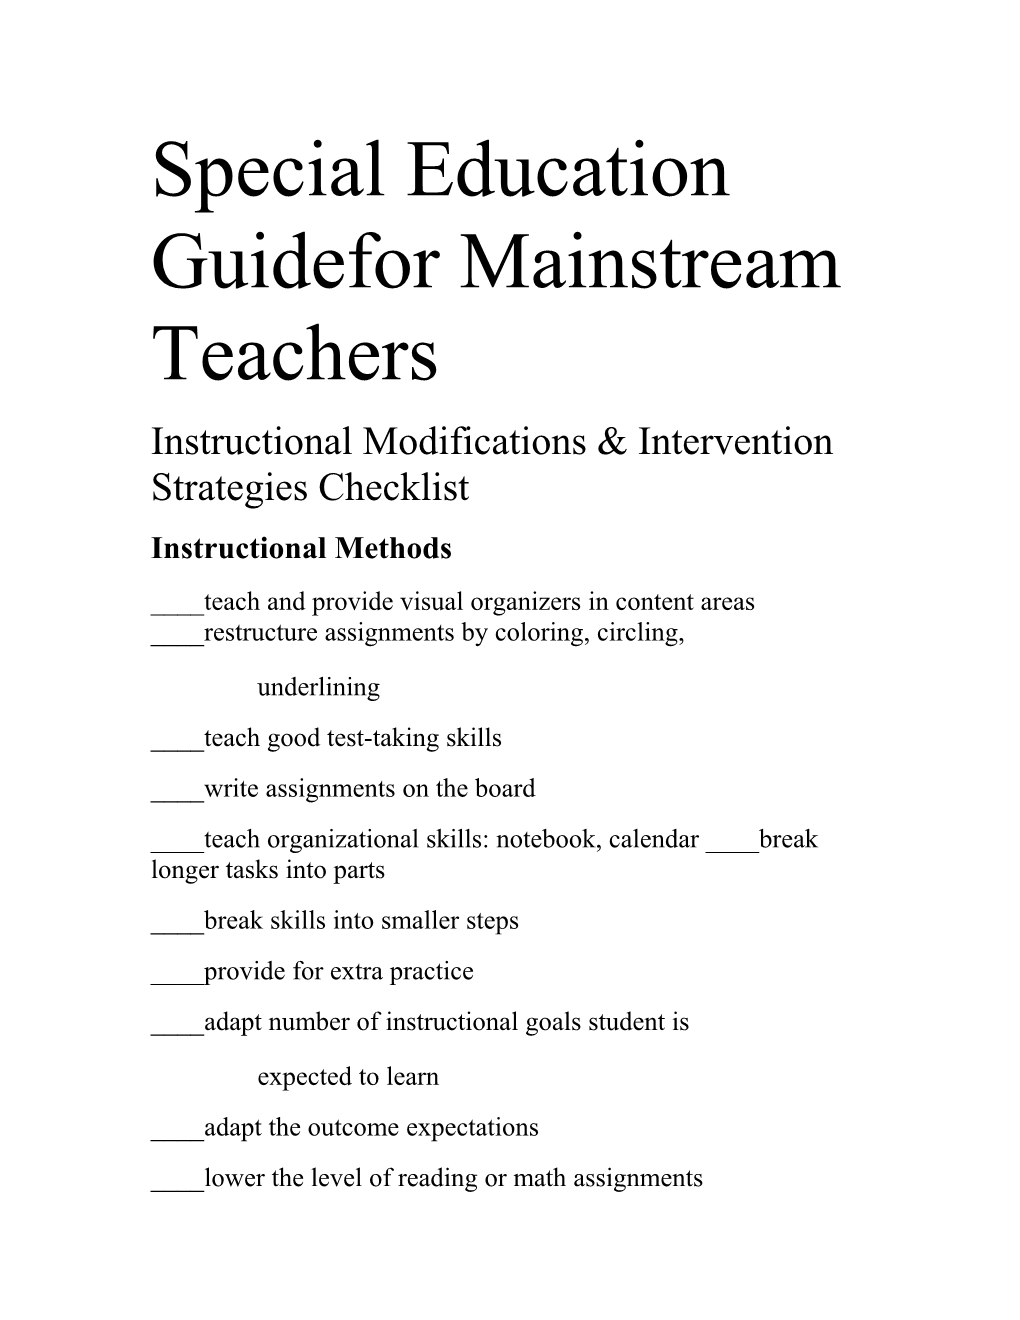 Special Education Guide for Mainstream Teachers